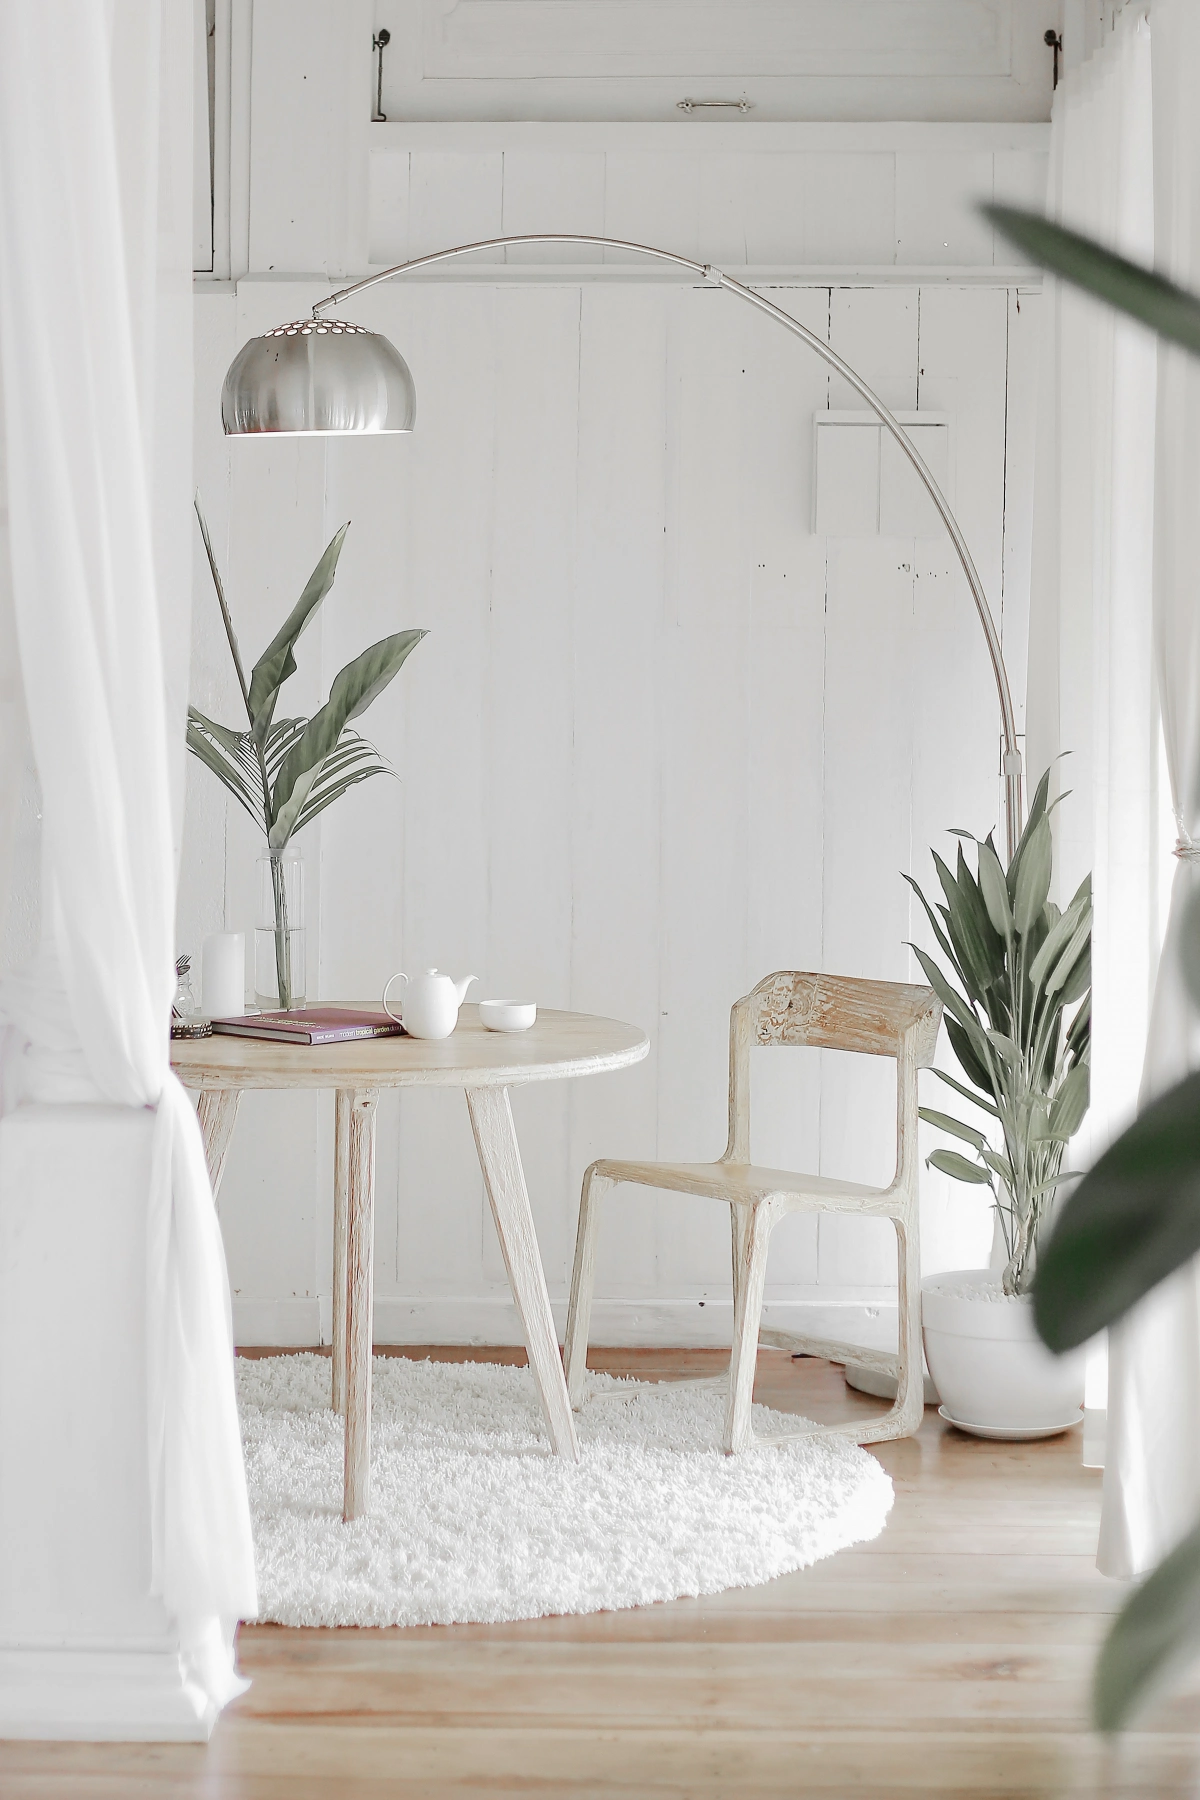 table ronde bois use meubles style shabby chic mur blanc bois lampe argent